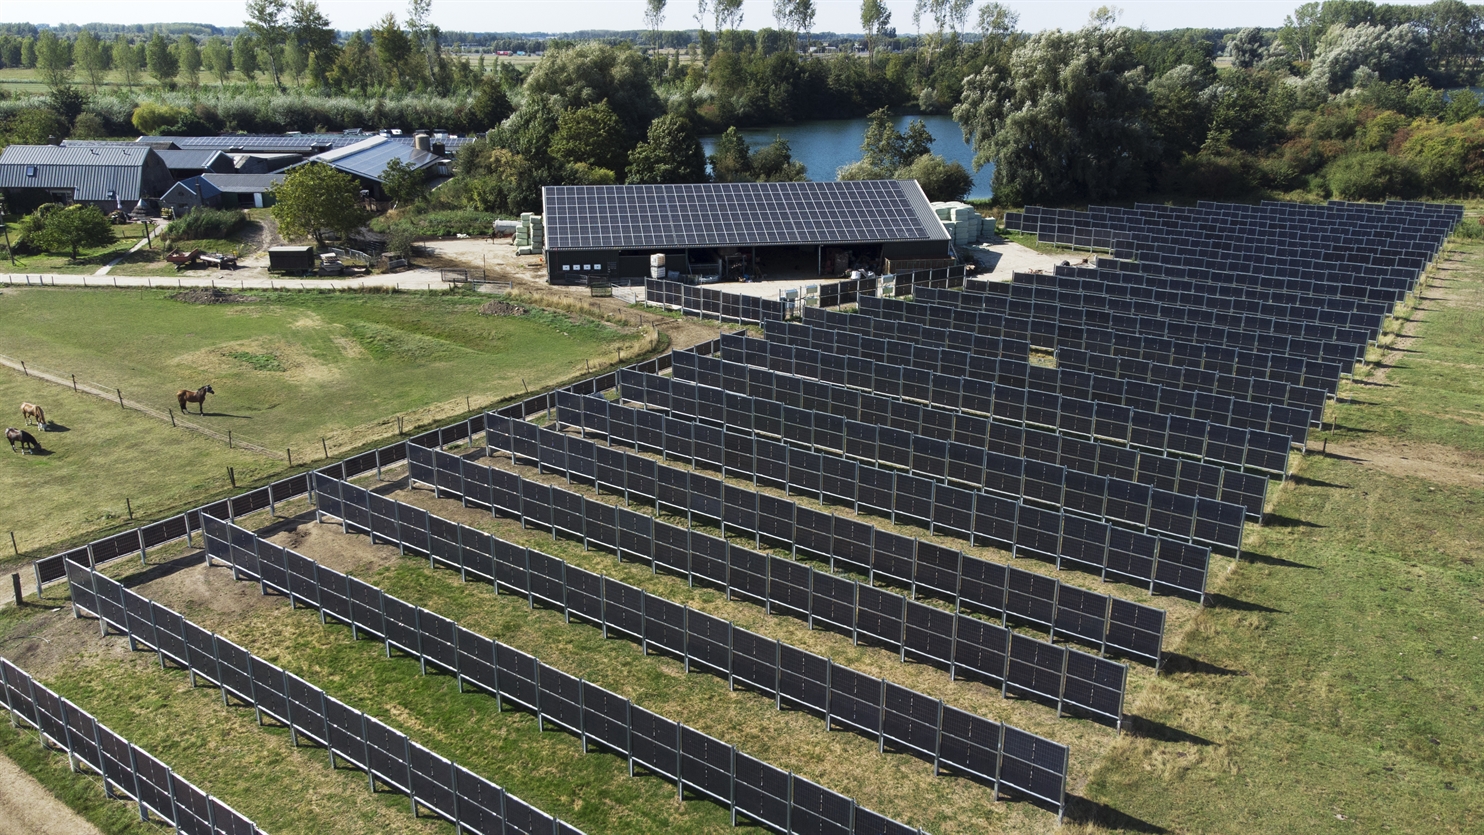 Example of farmland with solar panels